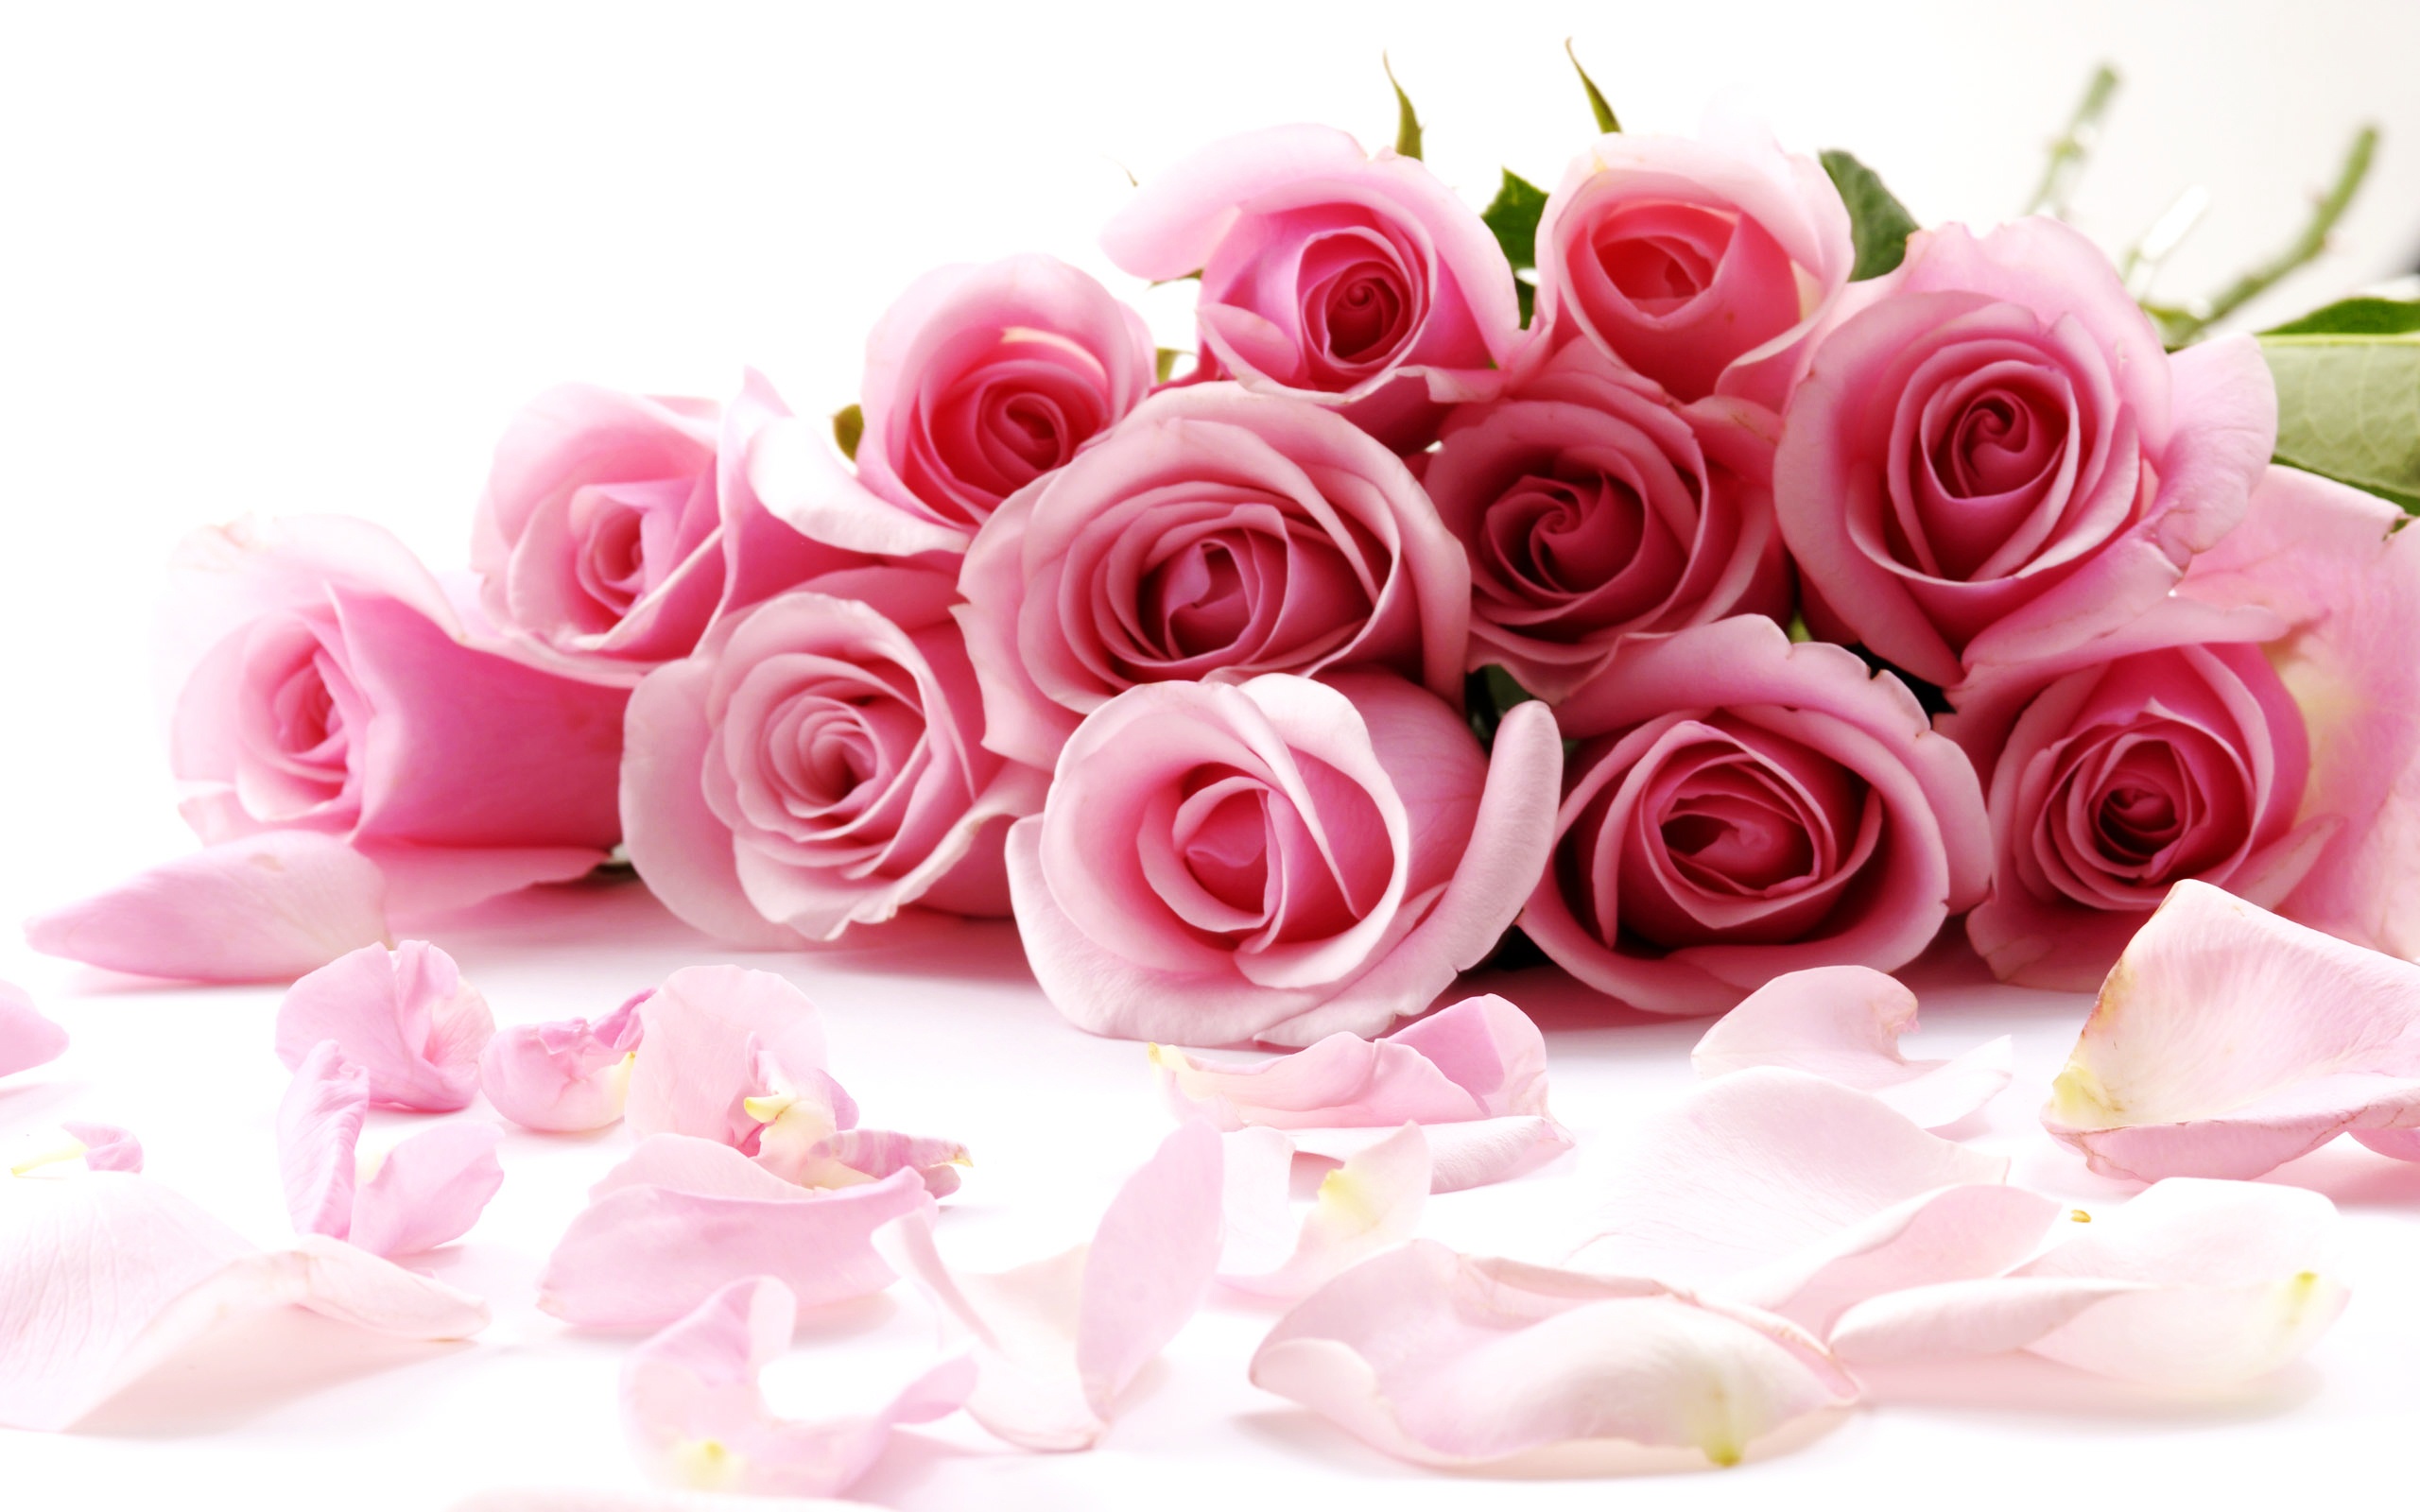 Rose Flowers Wallpaper 2560x1600 38193